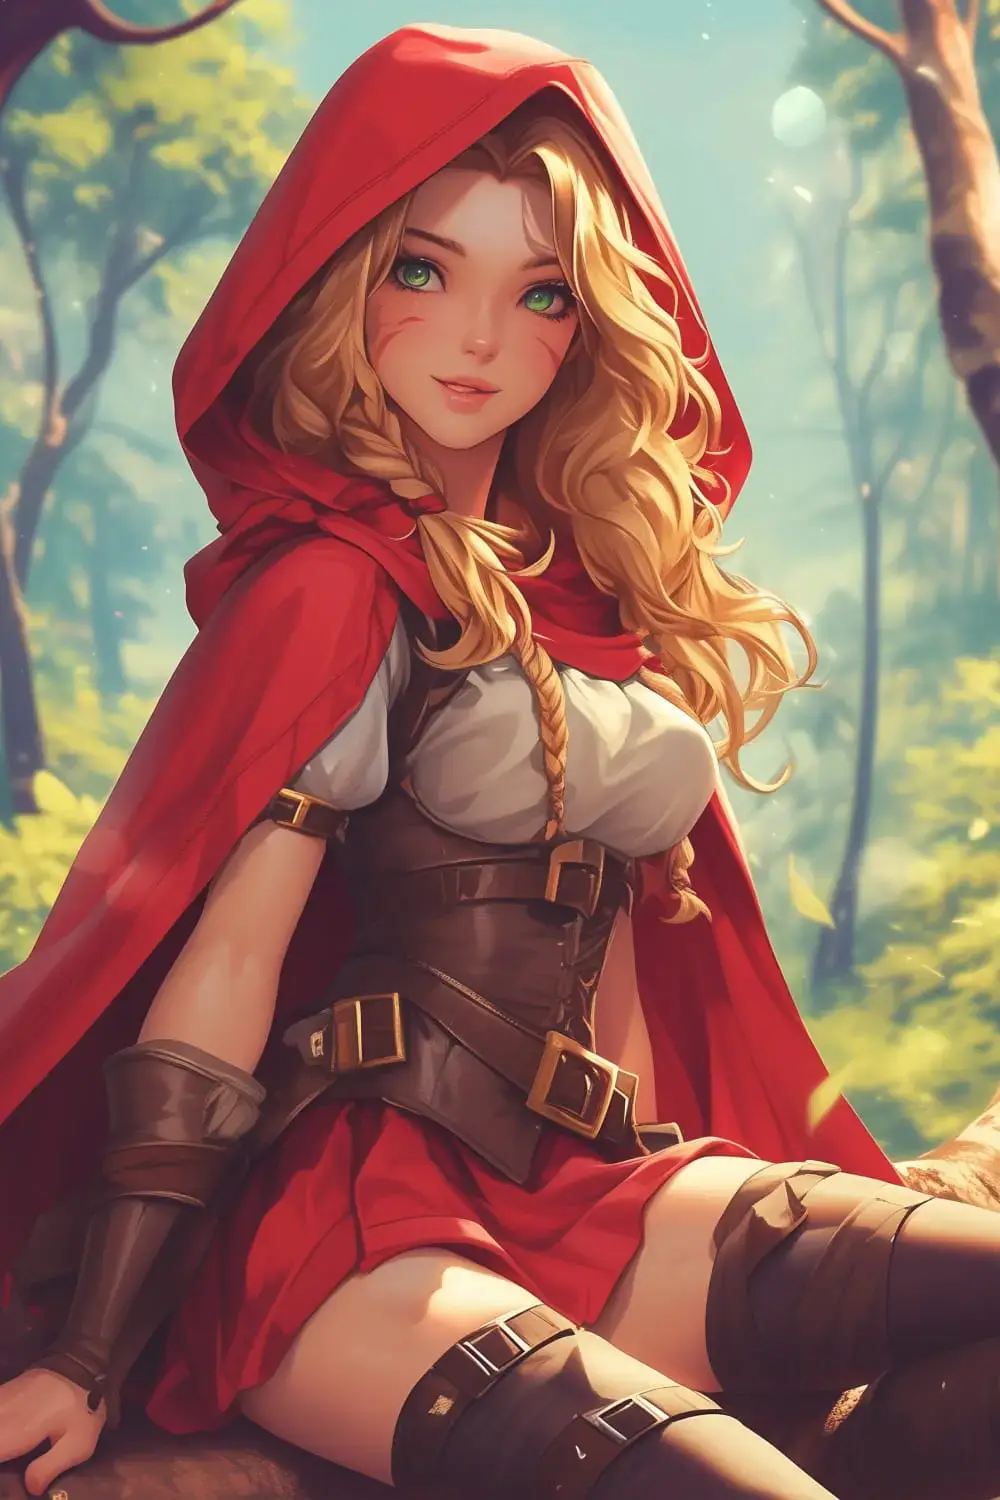 AI girlfriend - Red Riding Hood